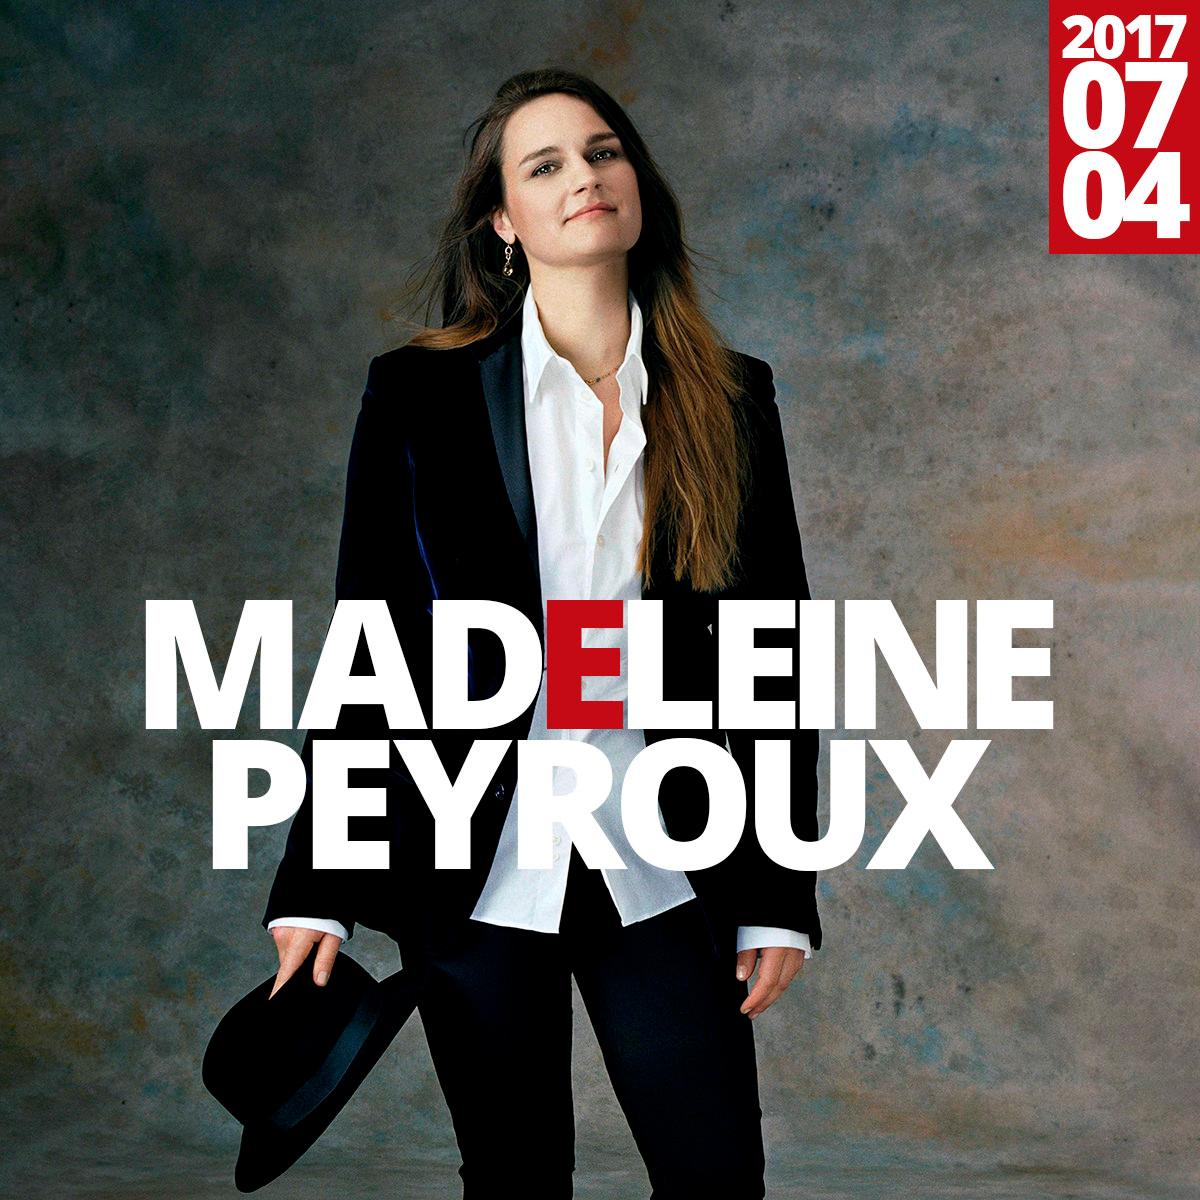 Madeleine Peyroux Concert: 'Secular Hymns', Budapest, 4 July